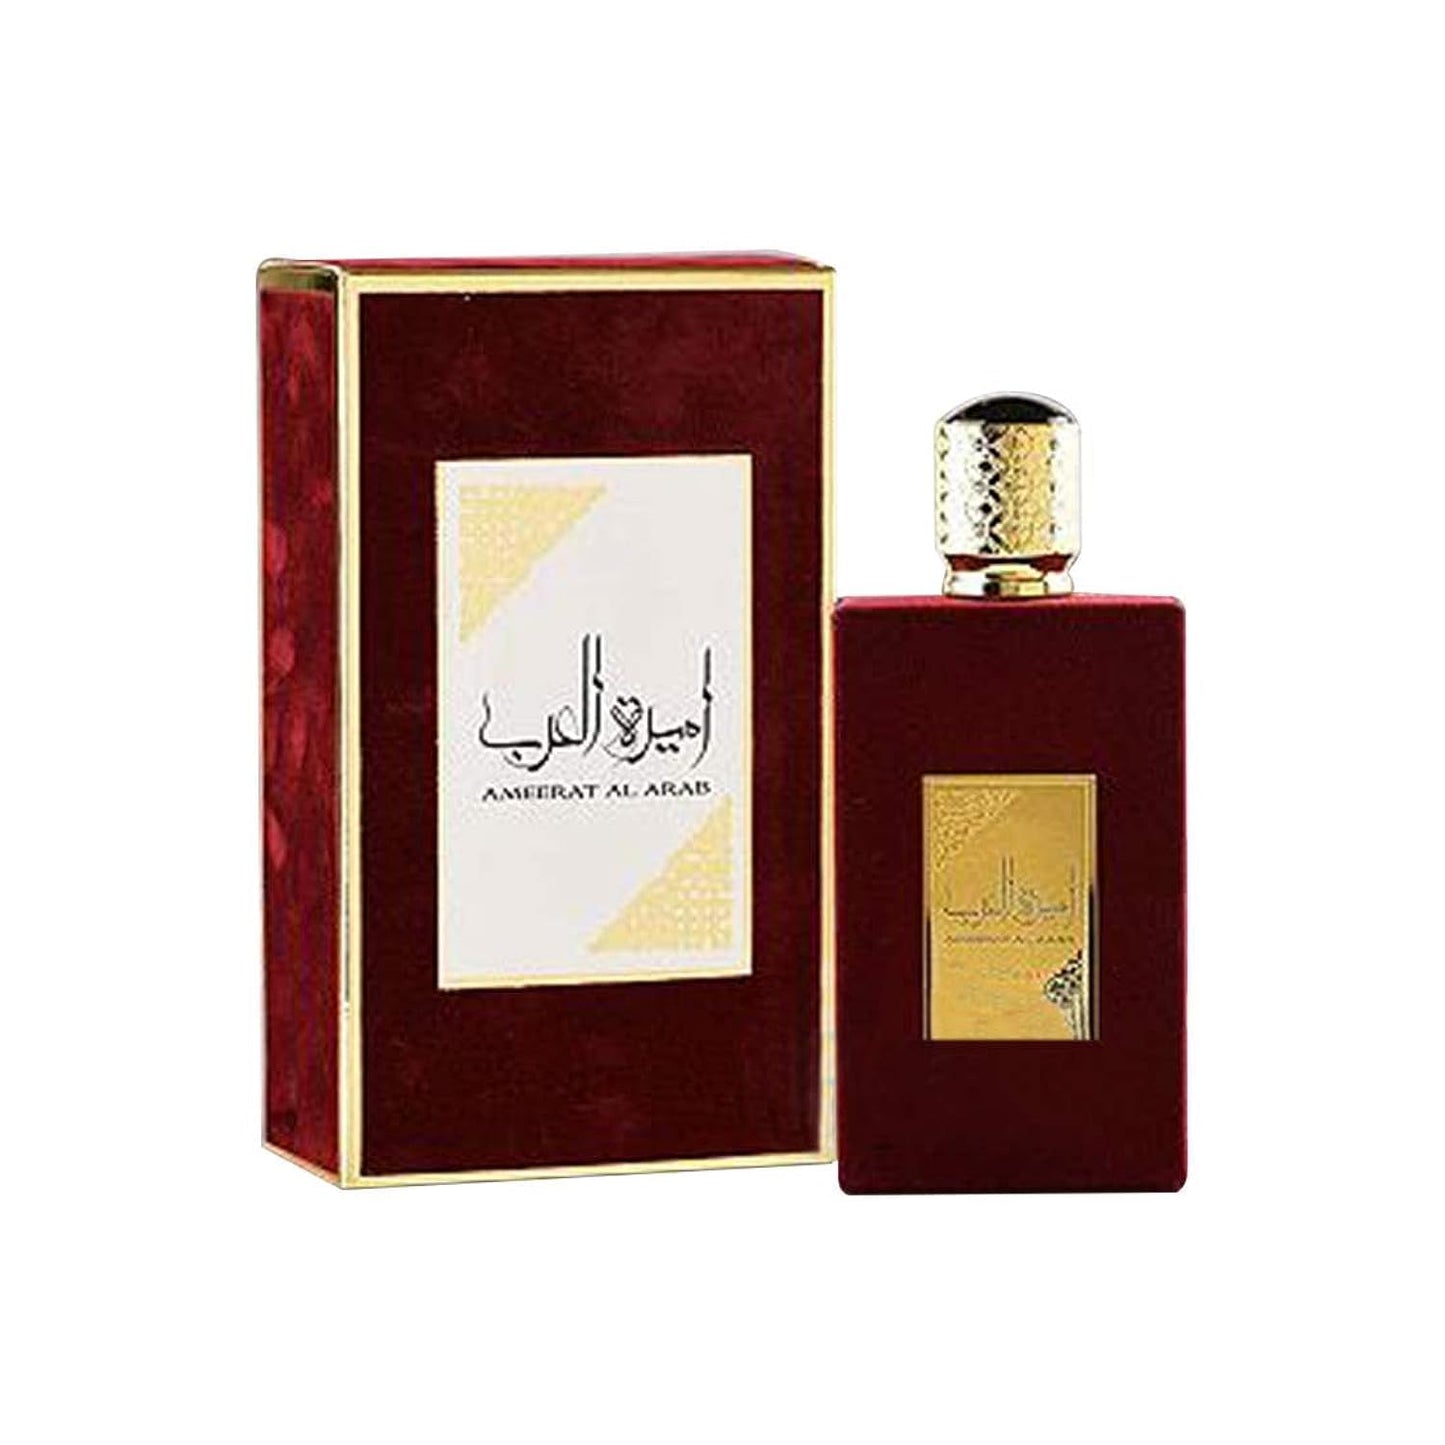 Lattafa - Ameerat Al Arab Eau de Parfum 100 ml Asdaaf